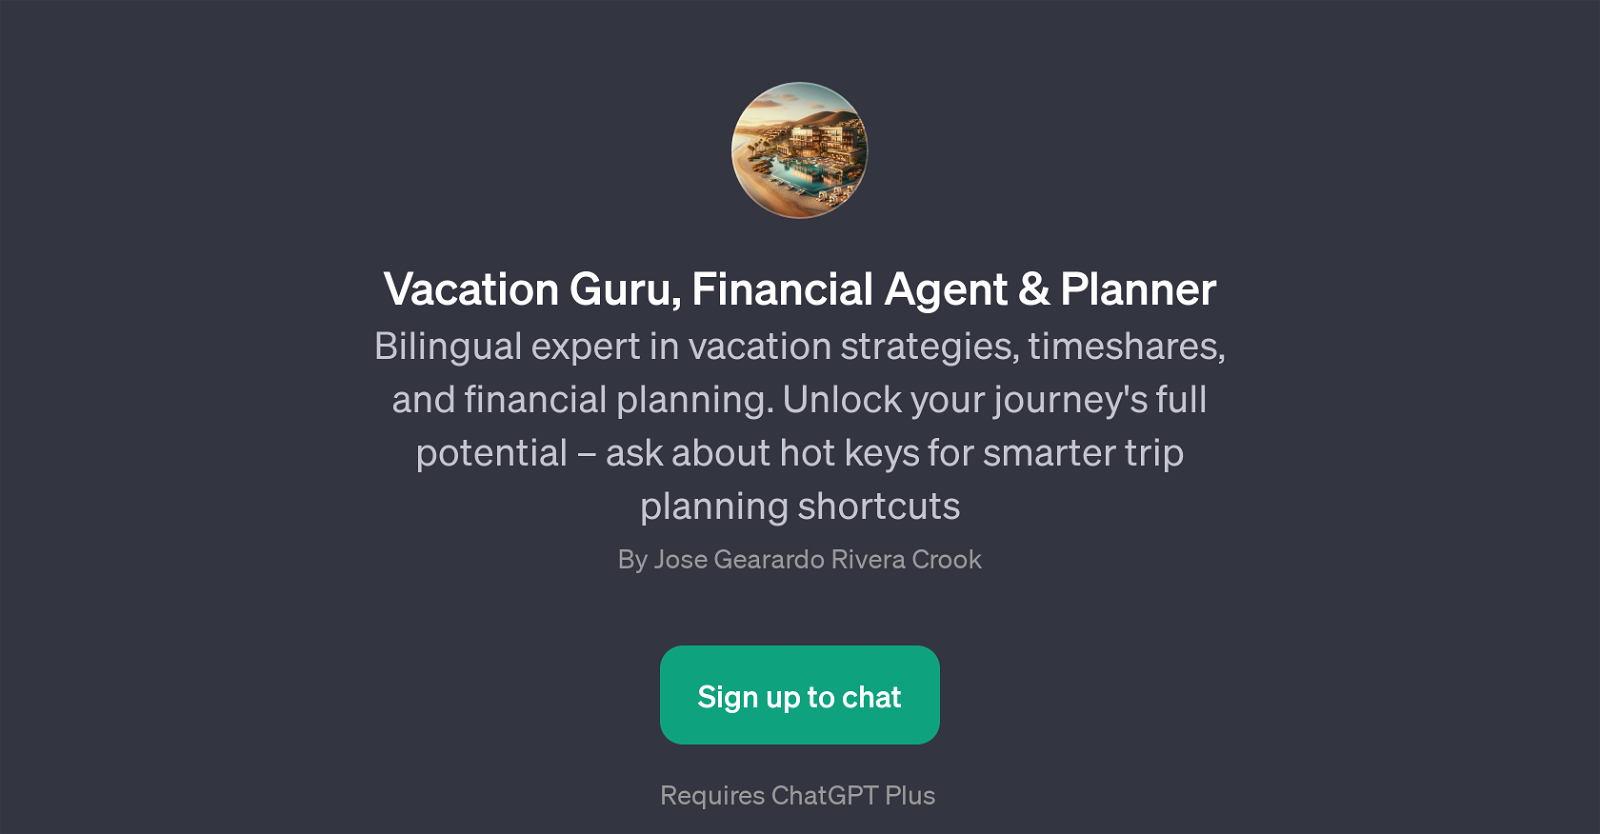 Vacation Guru, Financial Agent & Planner website